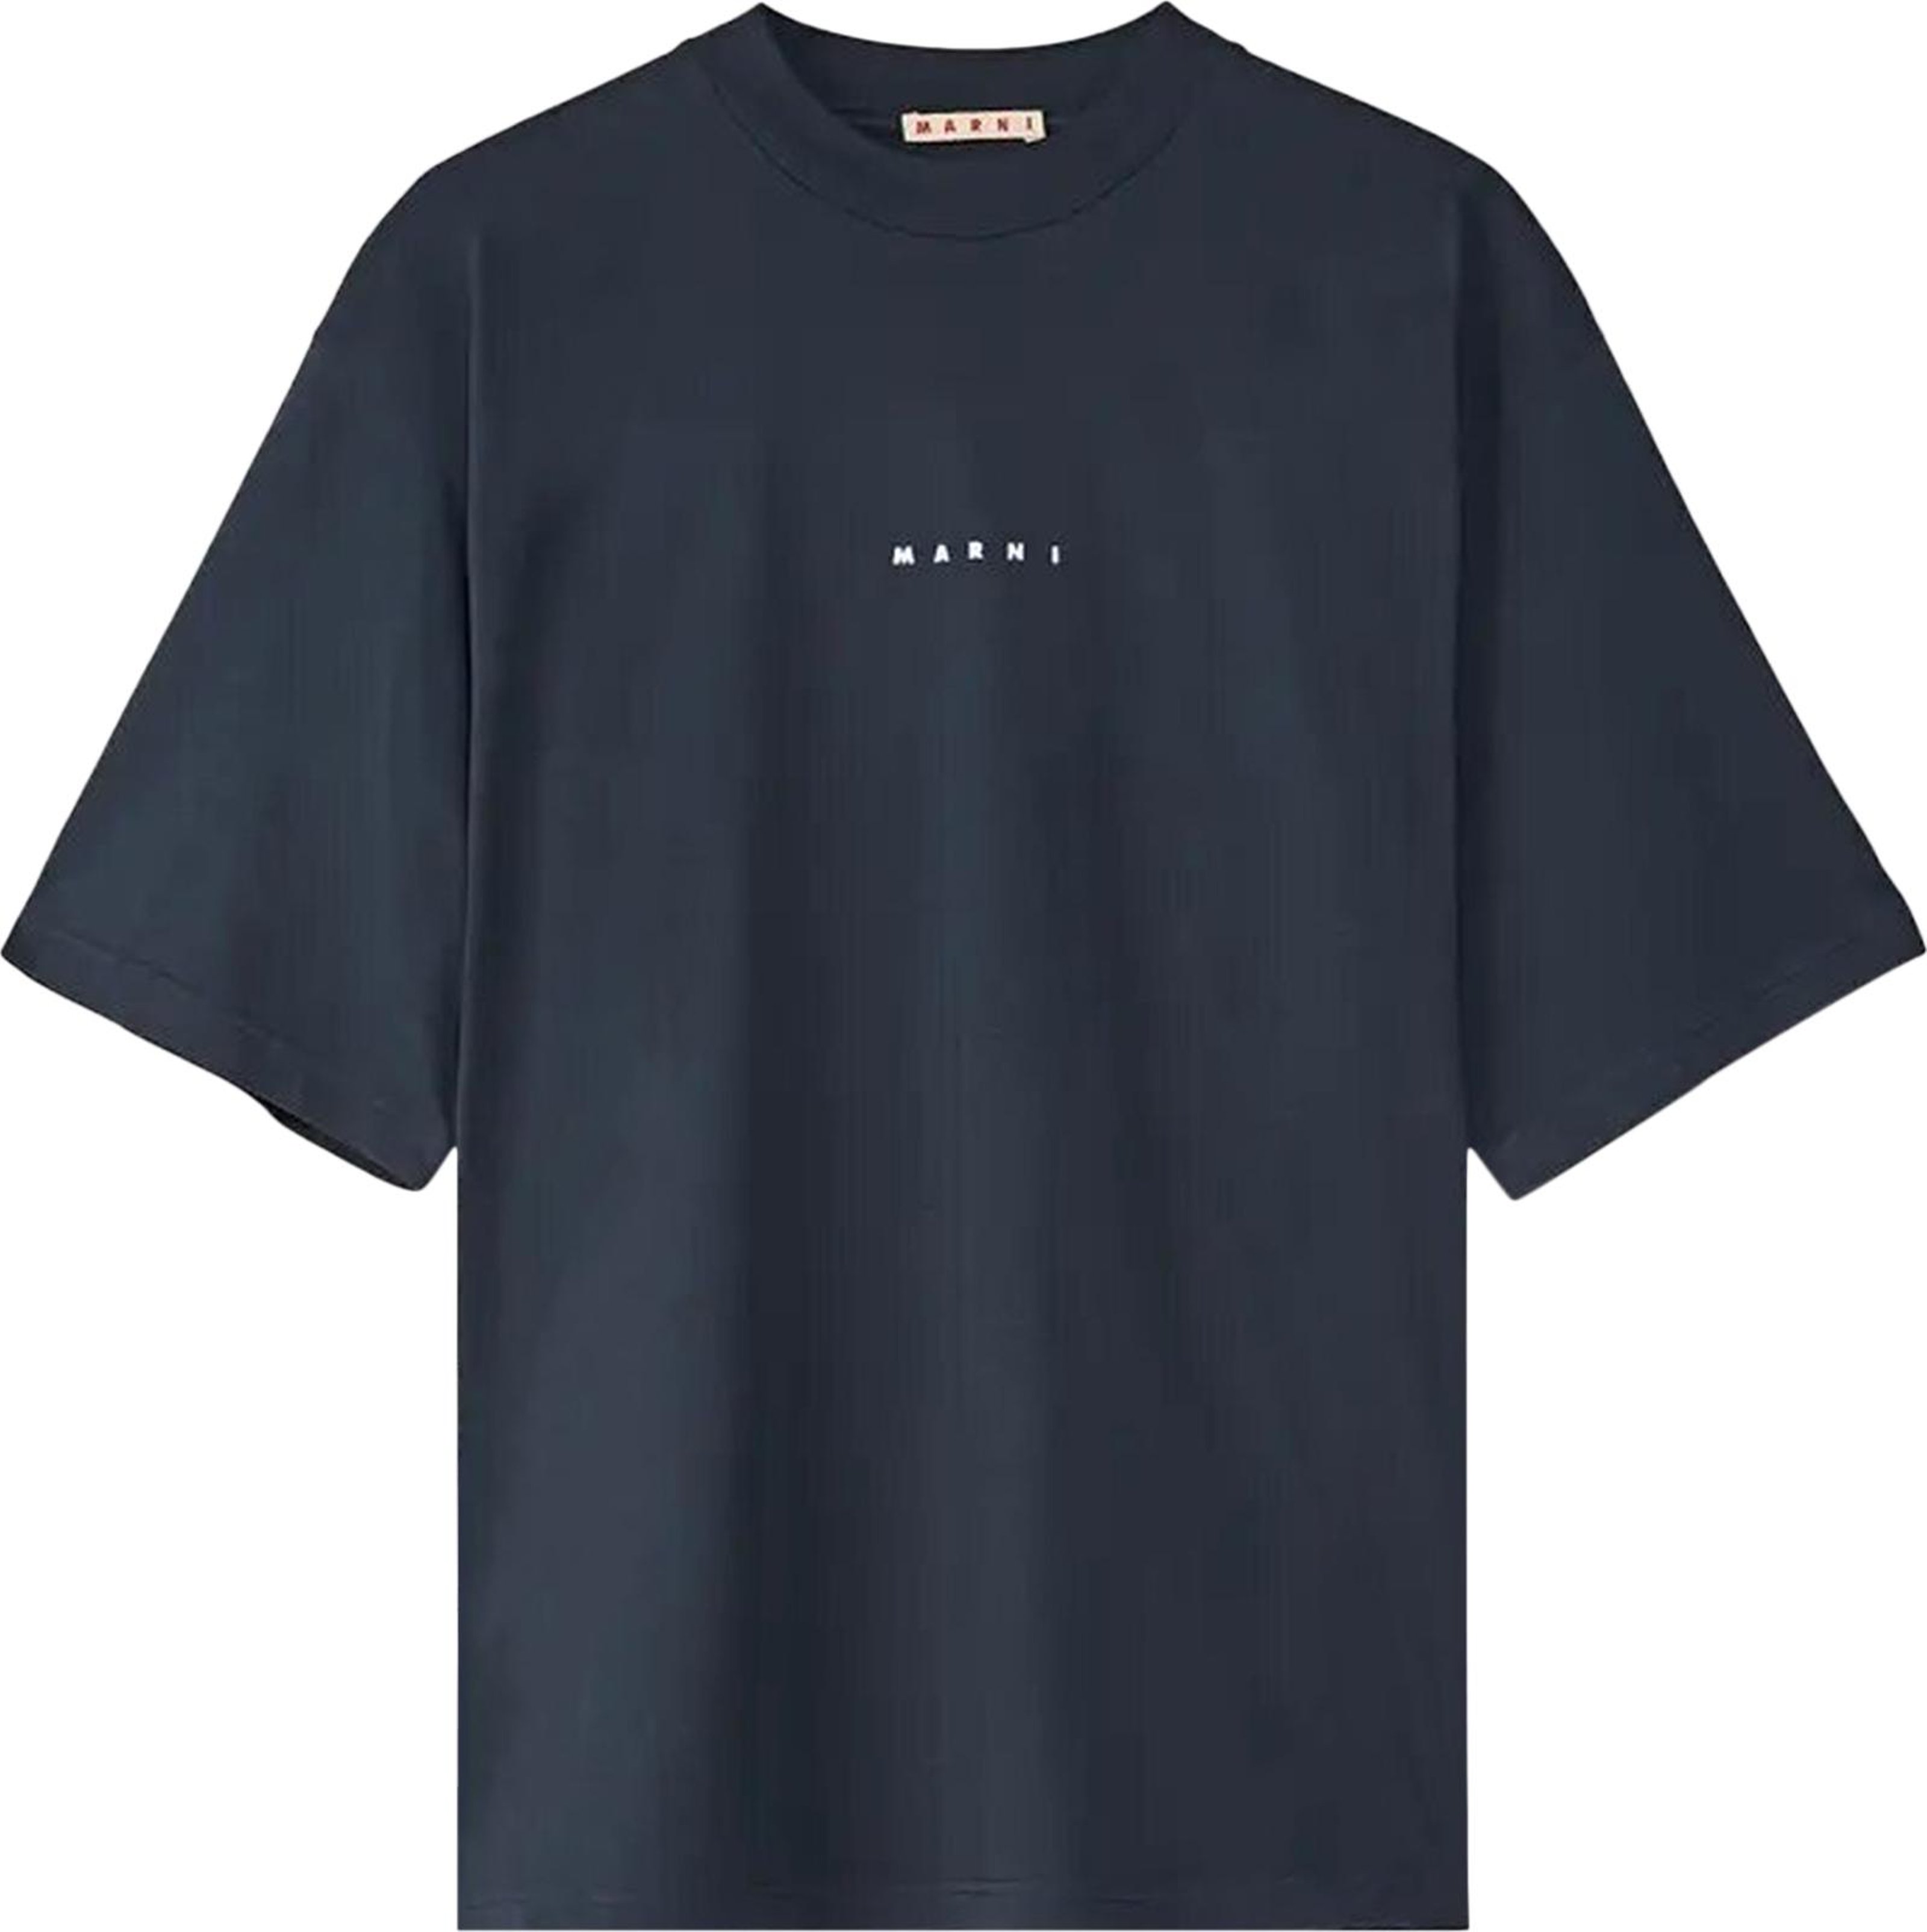 Buy Marni Crewneck Short-Sleeve T-Shirt 'Blue/Black' - HUMU0223P1 ...